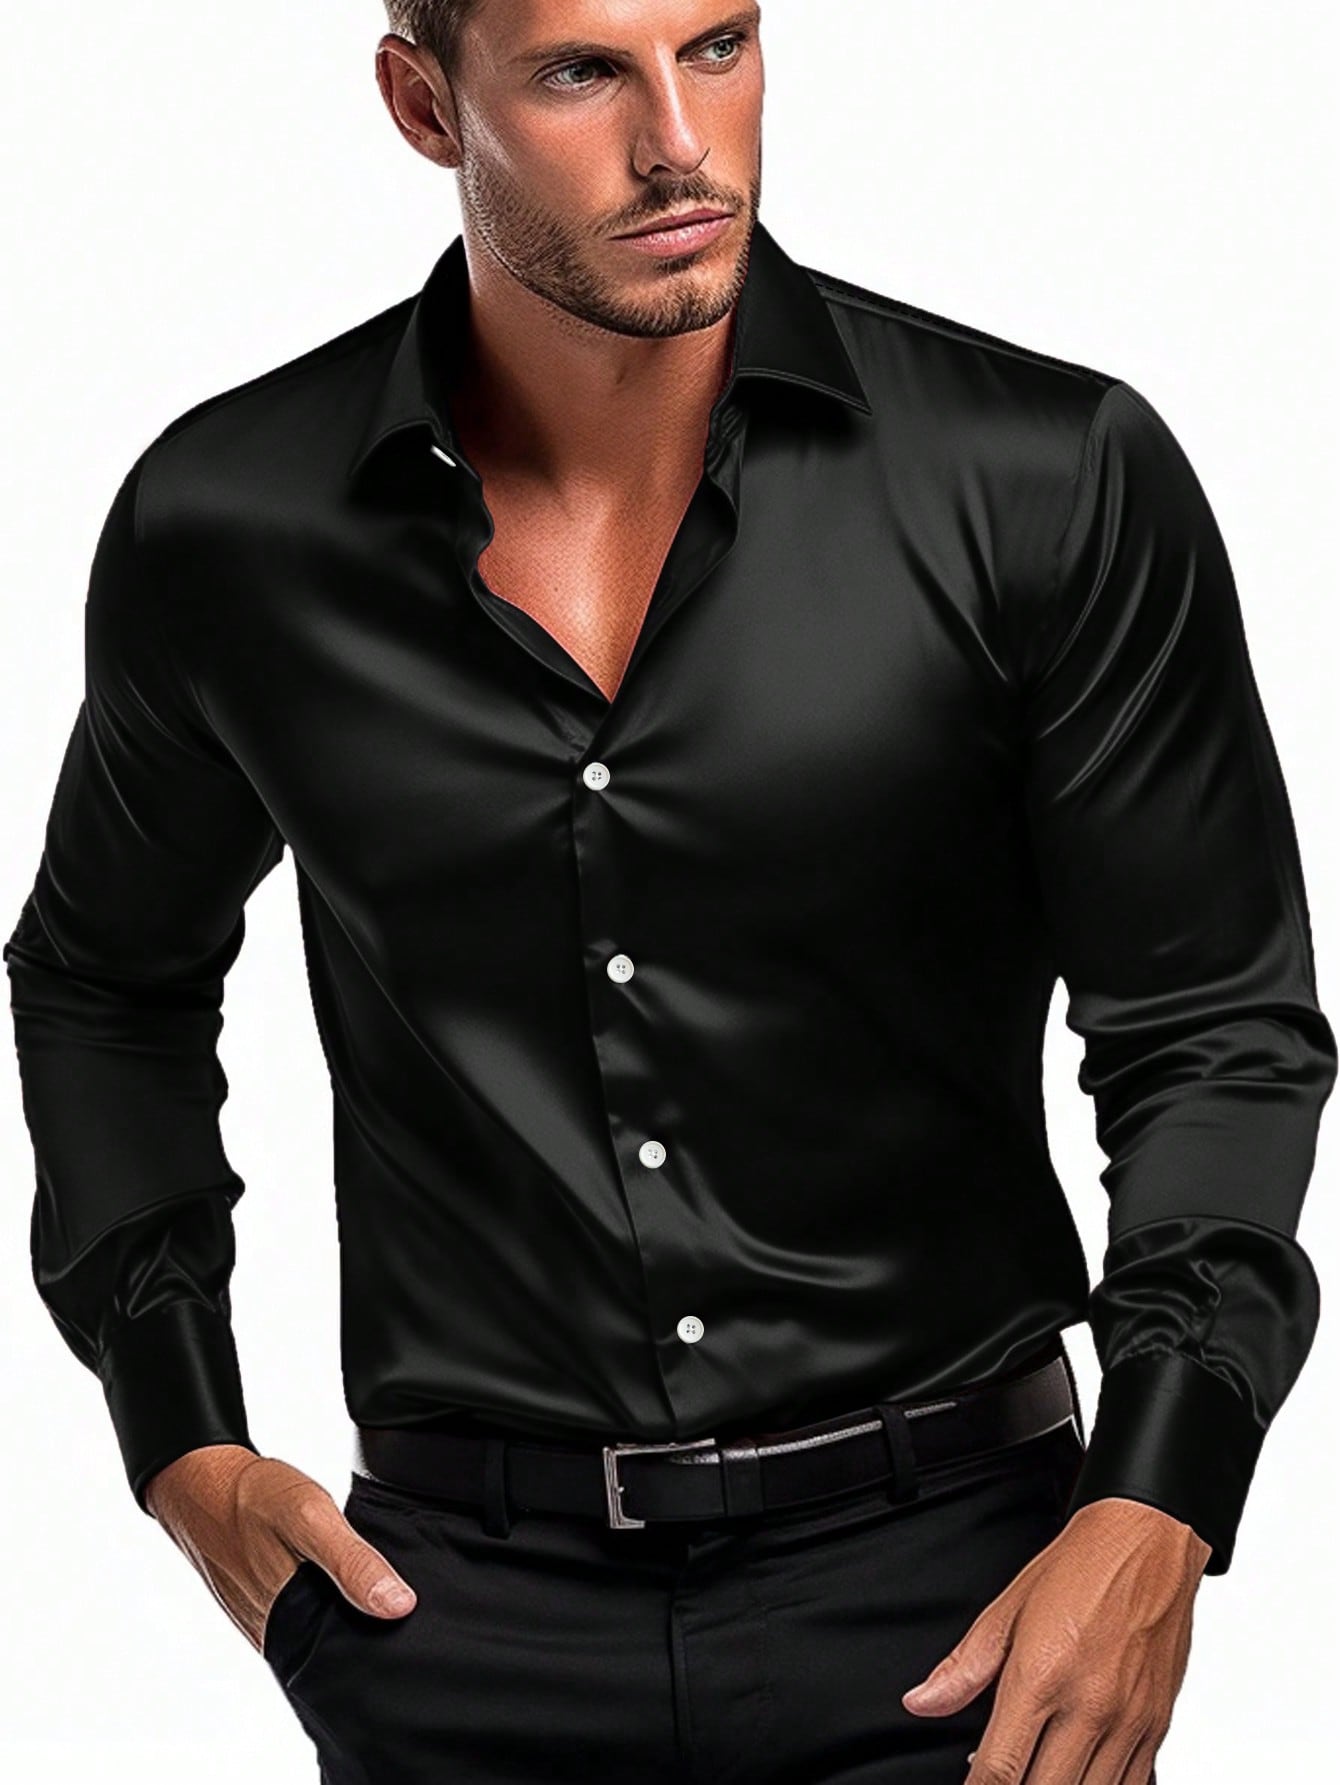 Men Solid Button Up Shirt